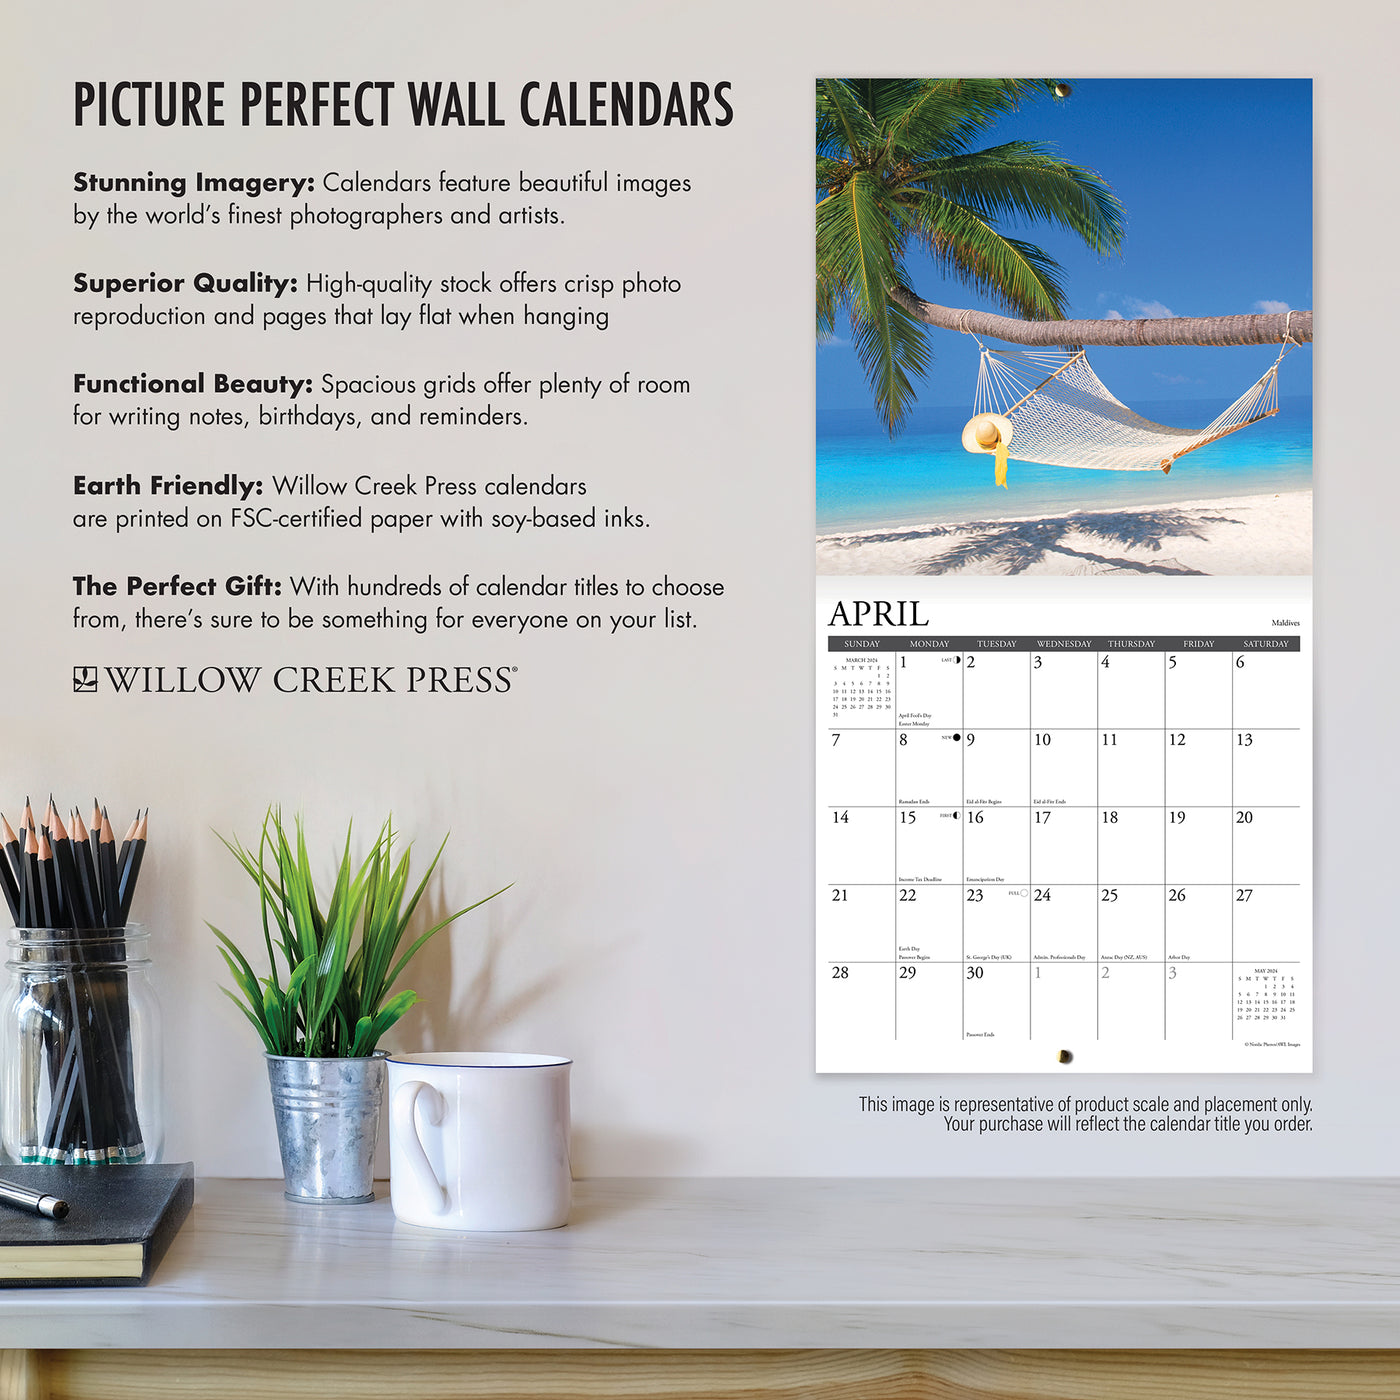 2024 Cathedrals Wall Calendar — Calendar Club